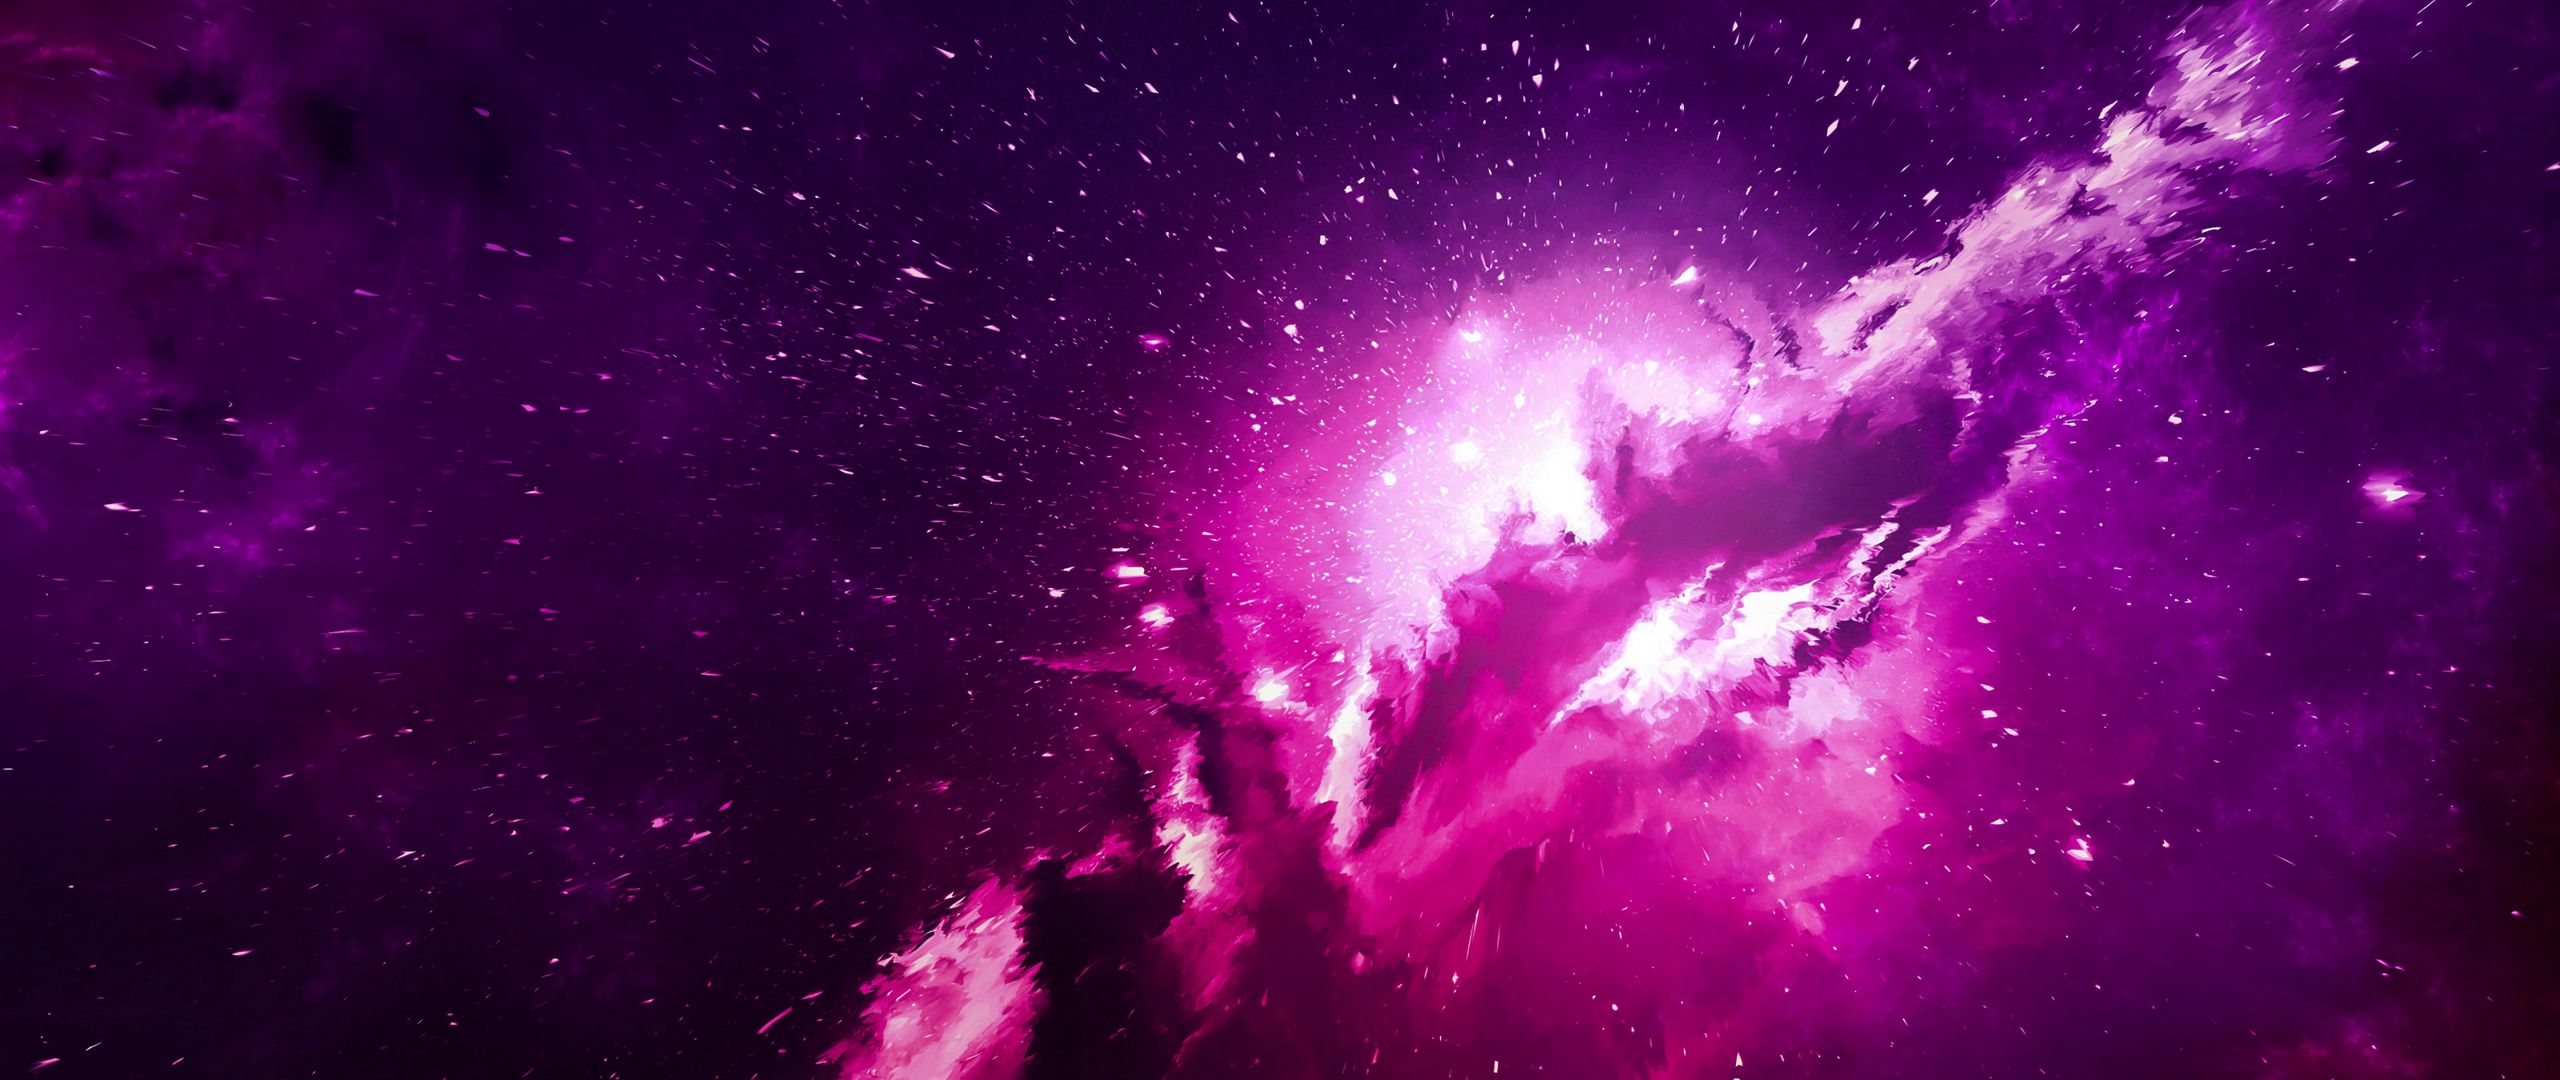 Download wallpaper 2560x1080 nebula, sparkles, light, cloud, purple dual  wide 1080p hd background